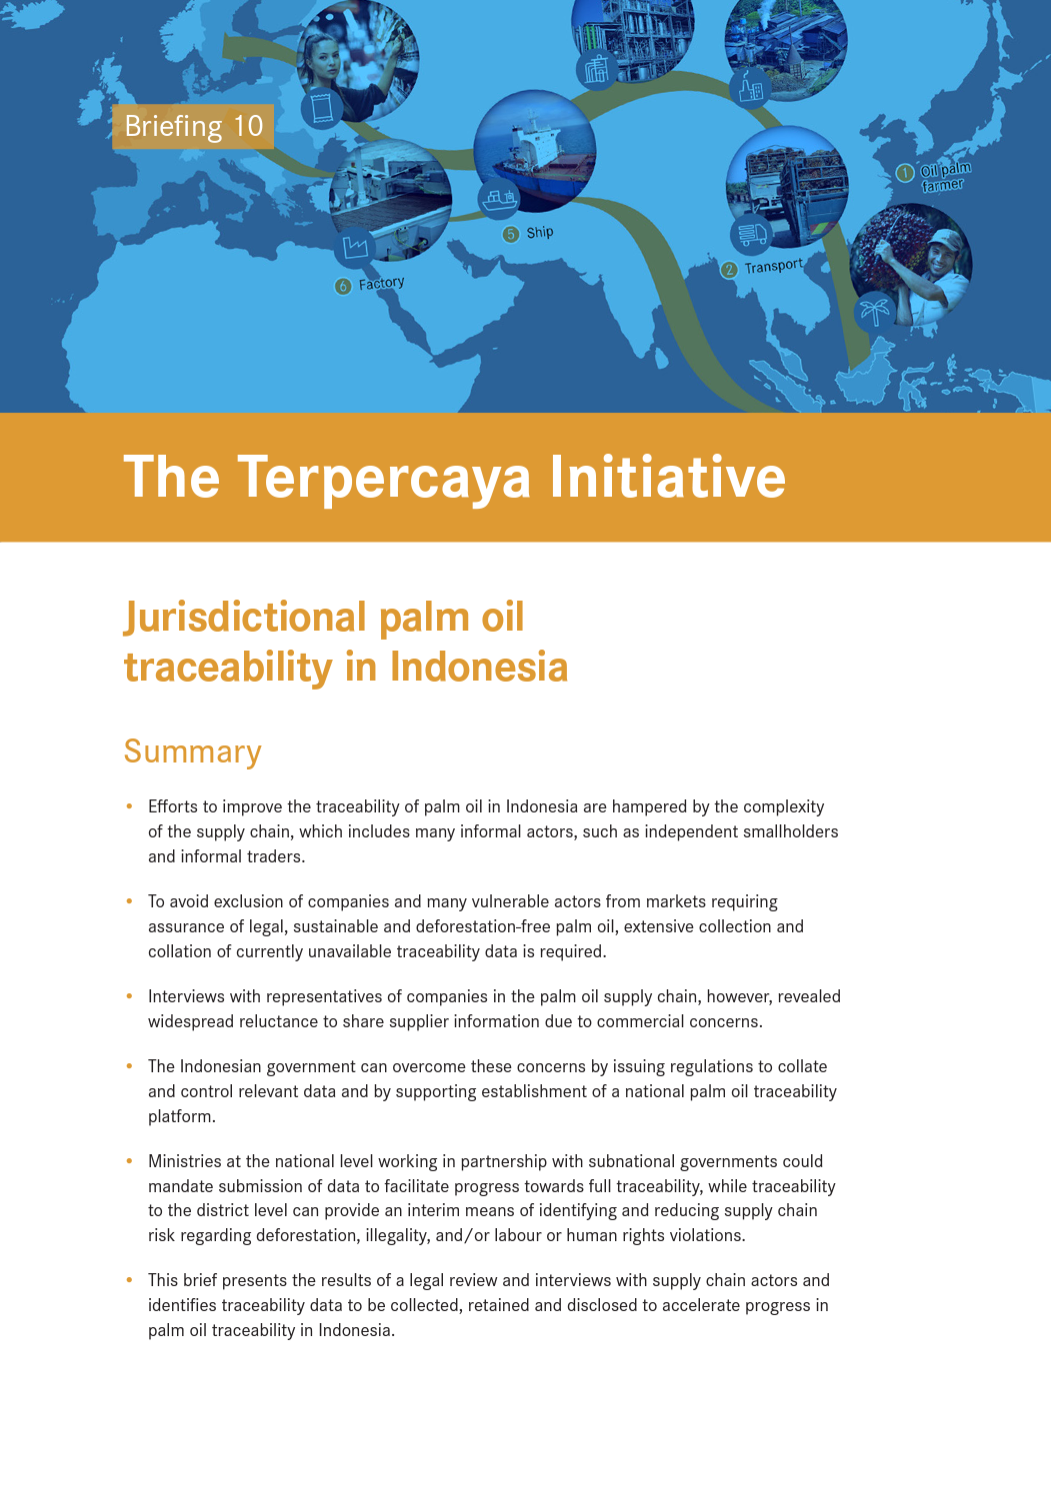 The Terpercaya Initiative: Jurisdictional Palm Oil Traceability in Indonesia